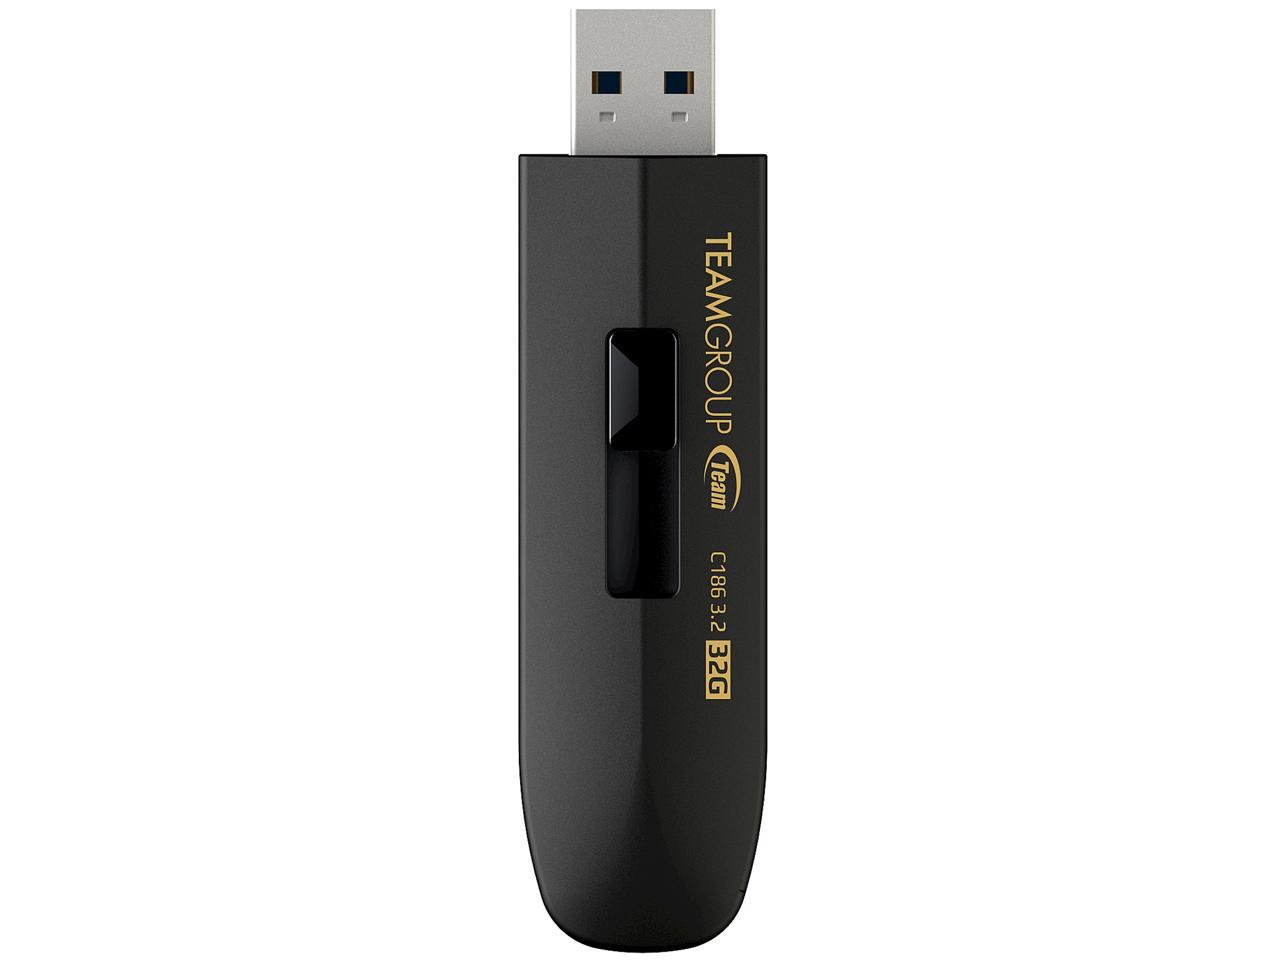 2X 32GB Slide-out Design USB 3.0 Flash Drive Memory Stick Thumb Storage US Stock 